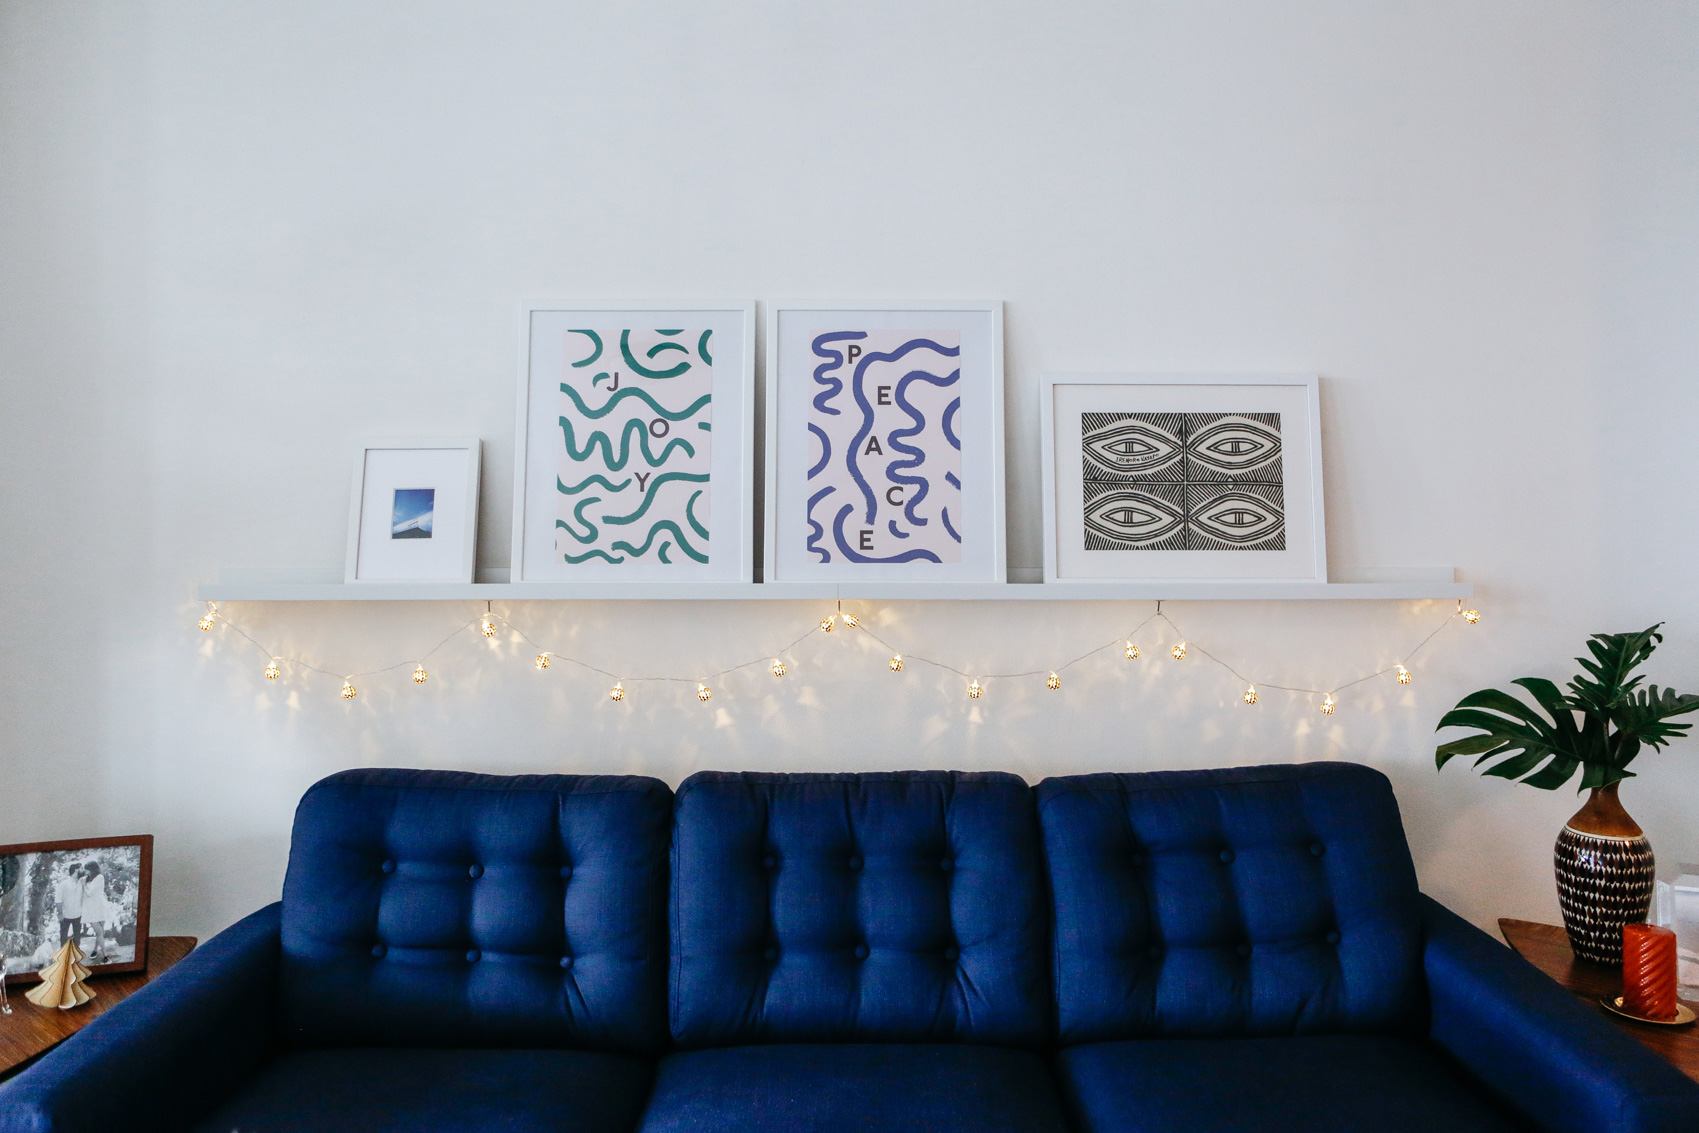 Shelf wall art and Christmas lights with blue sofa